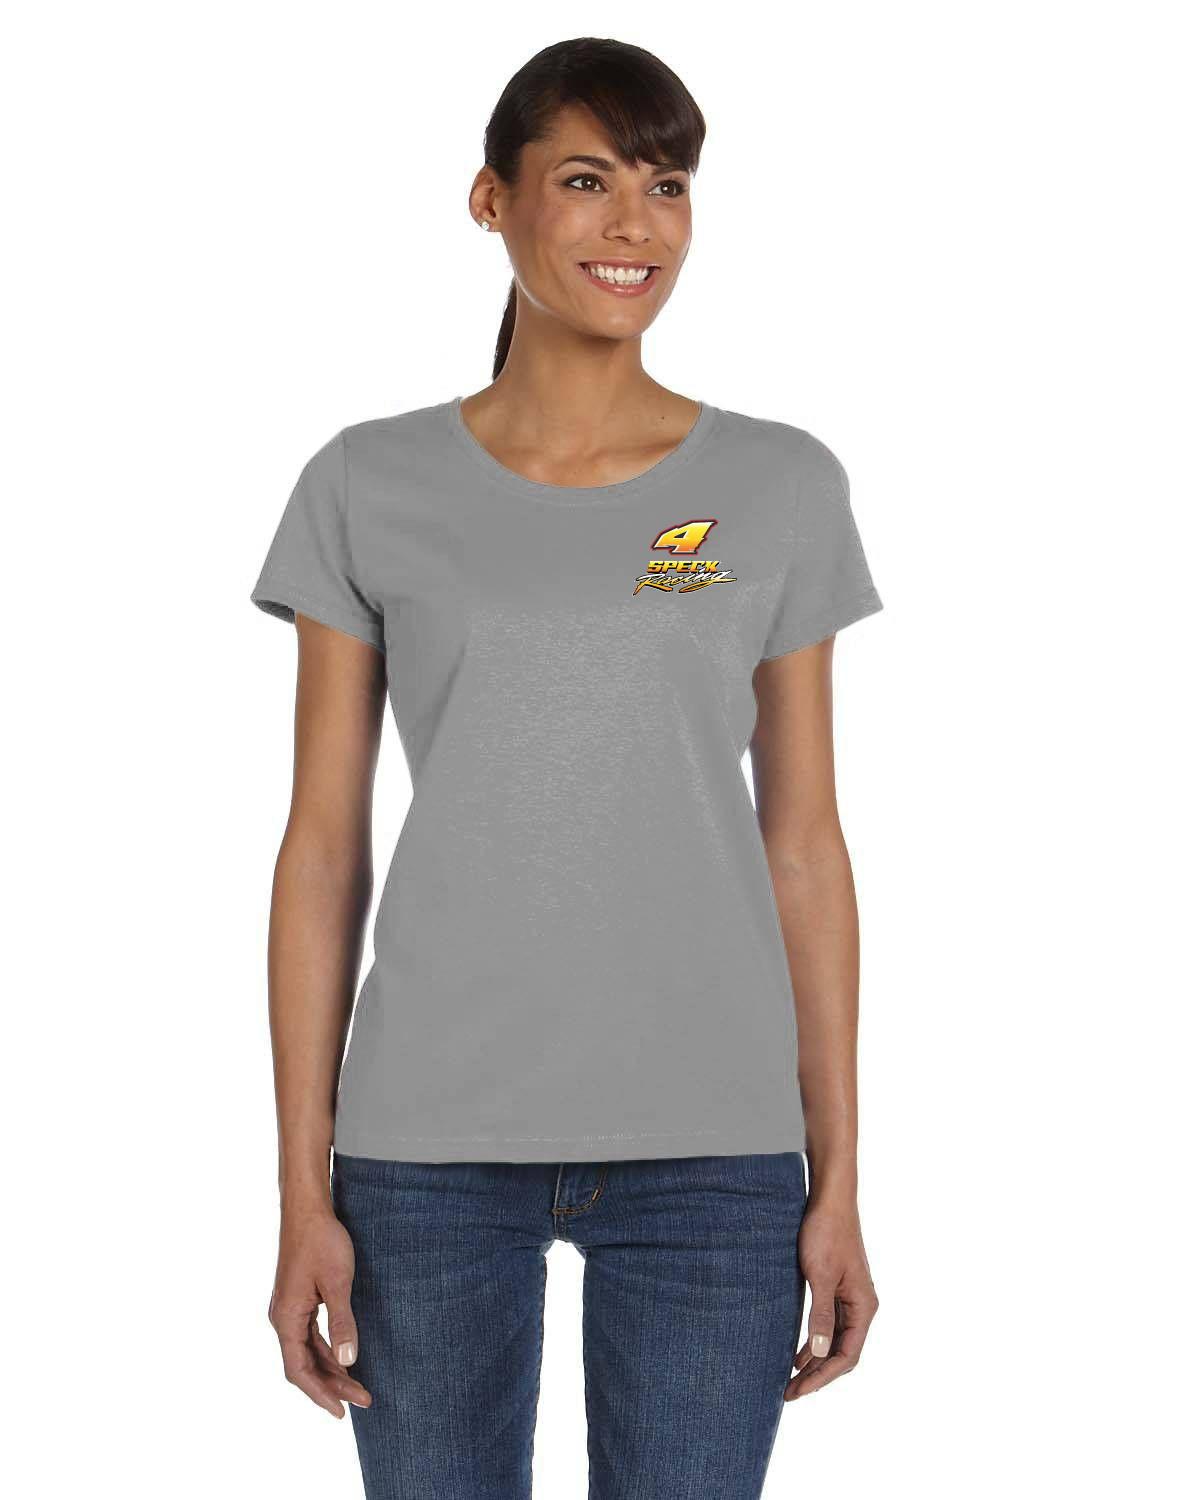 Emmit Speck Racing Ladies'  T-Shirt